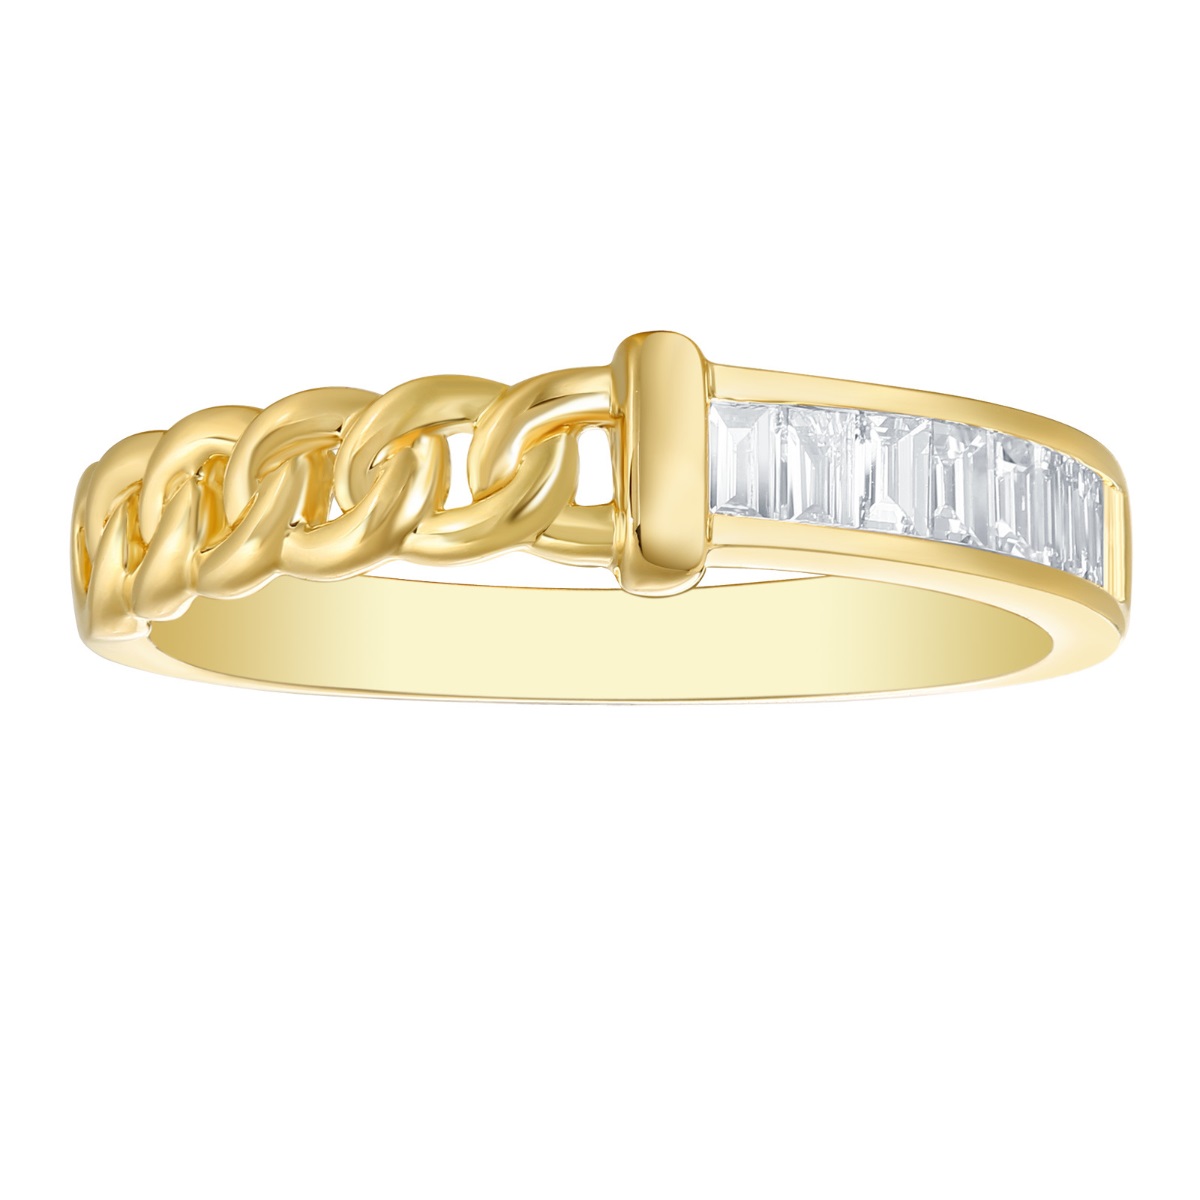 R36694WHT – 18K Yellow Gold  Diamond Ring, 0.23 TCW